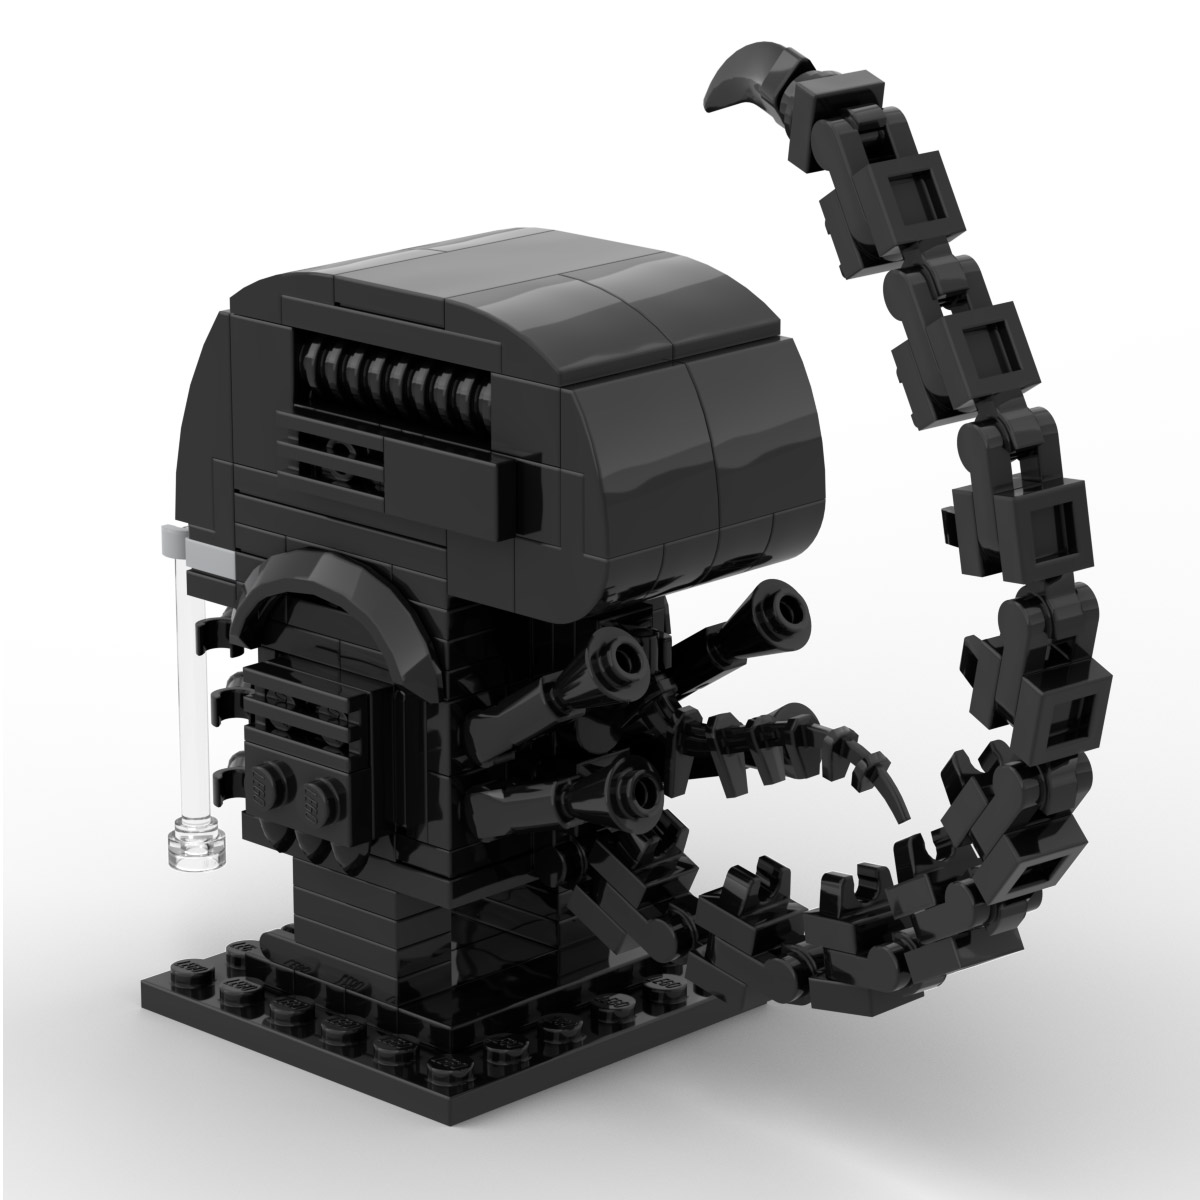 Lego Alien Xenomorph Moc